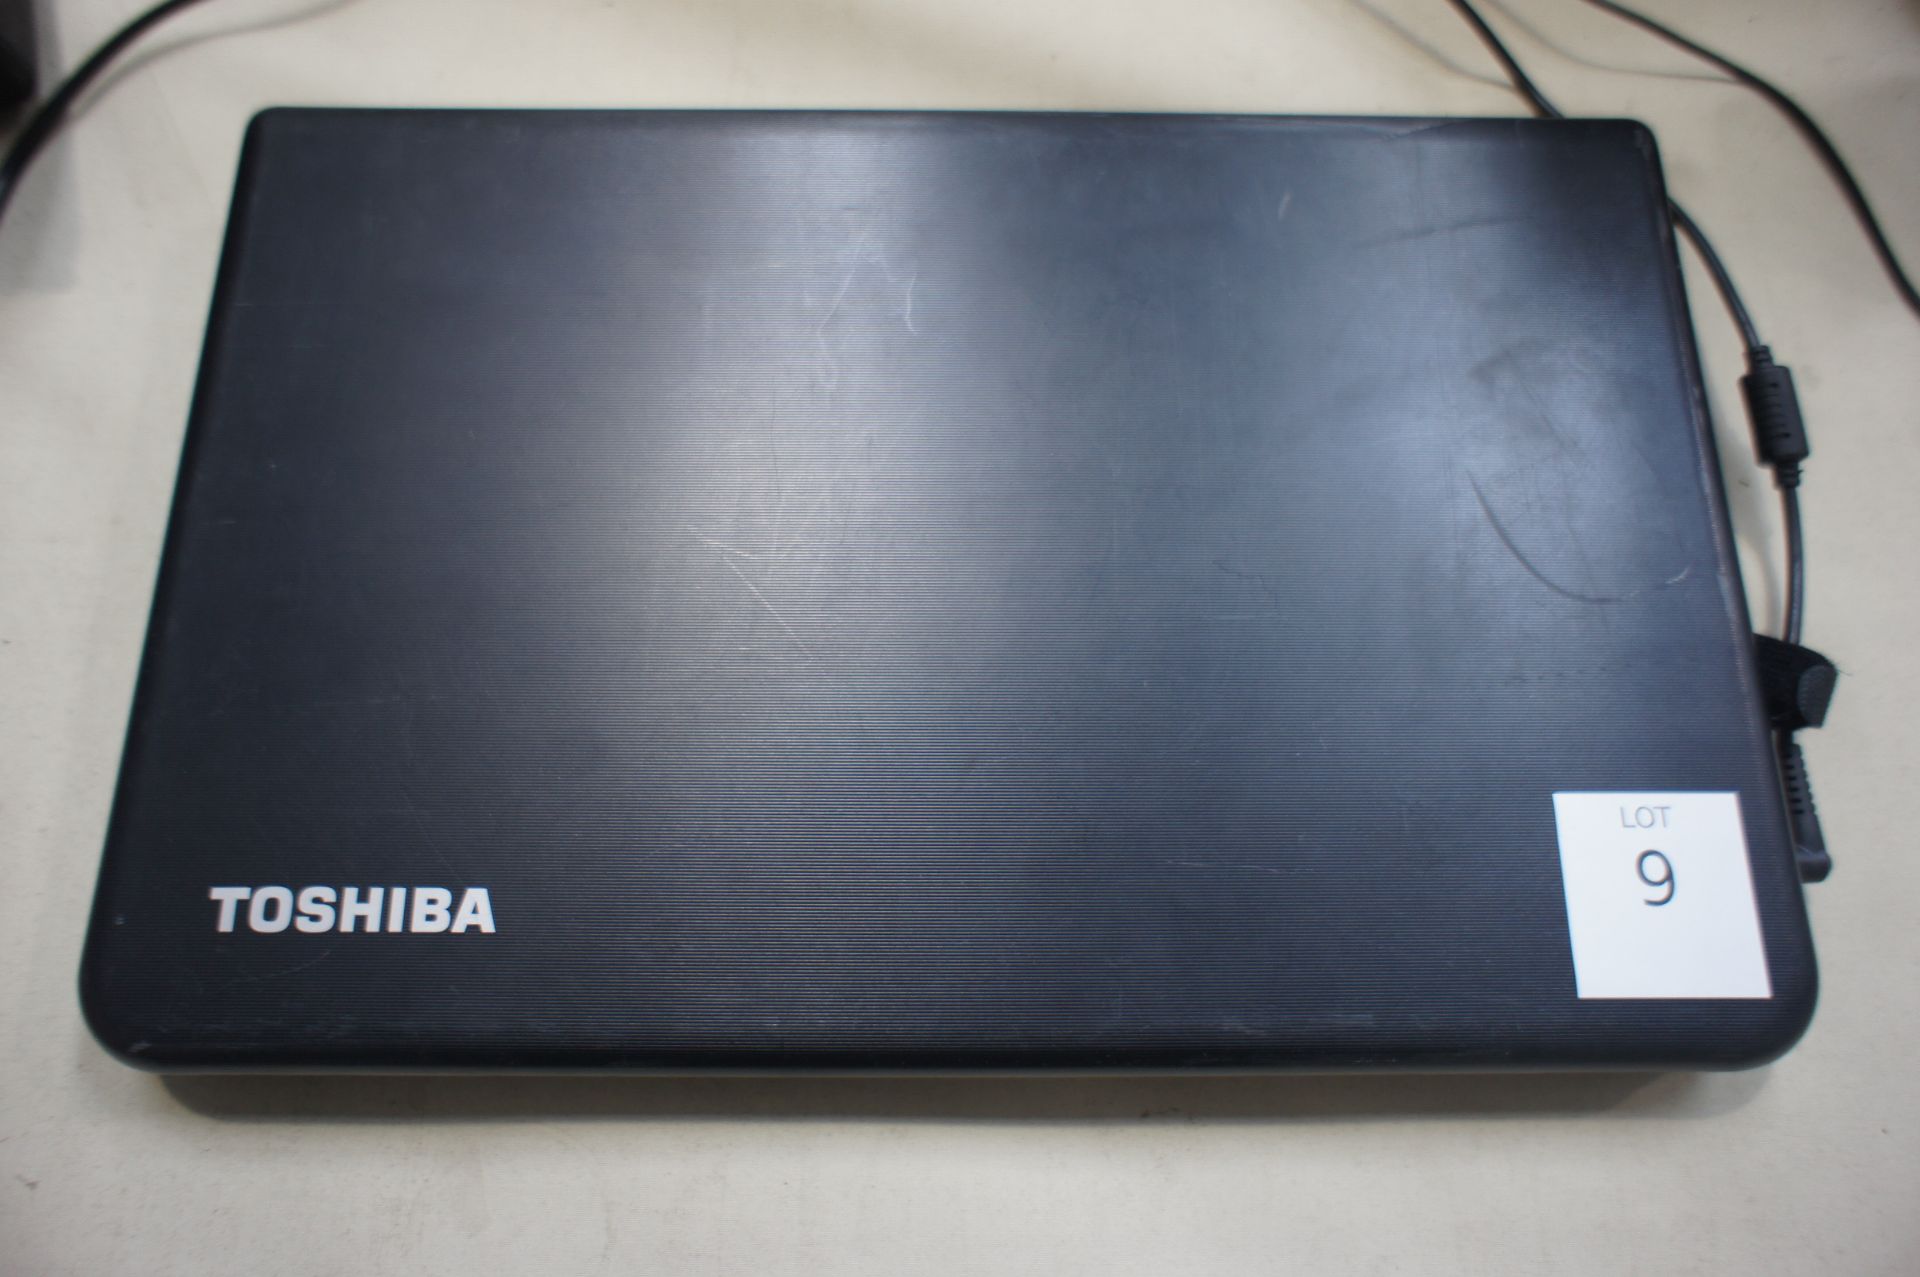 Toshiba Satellite C70 Laptop Computer - Image 3 of 3